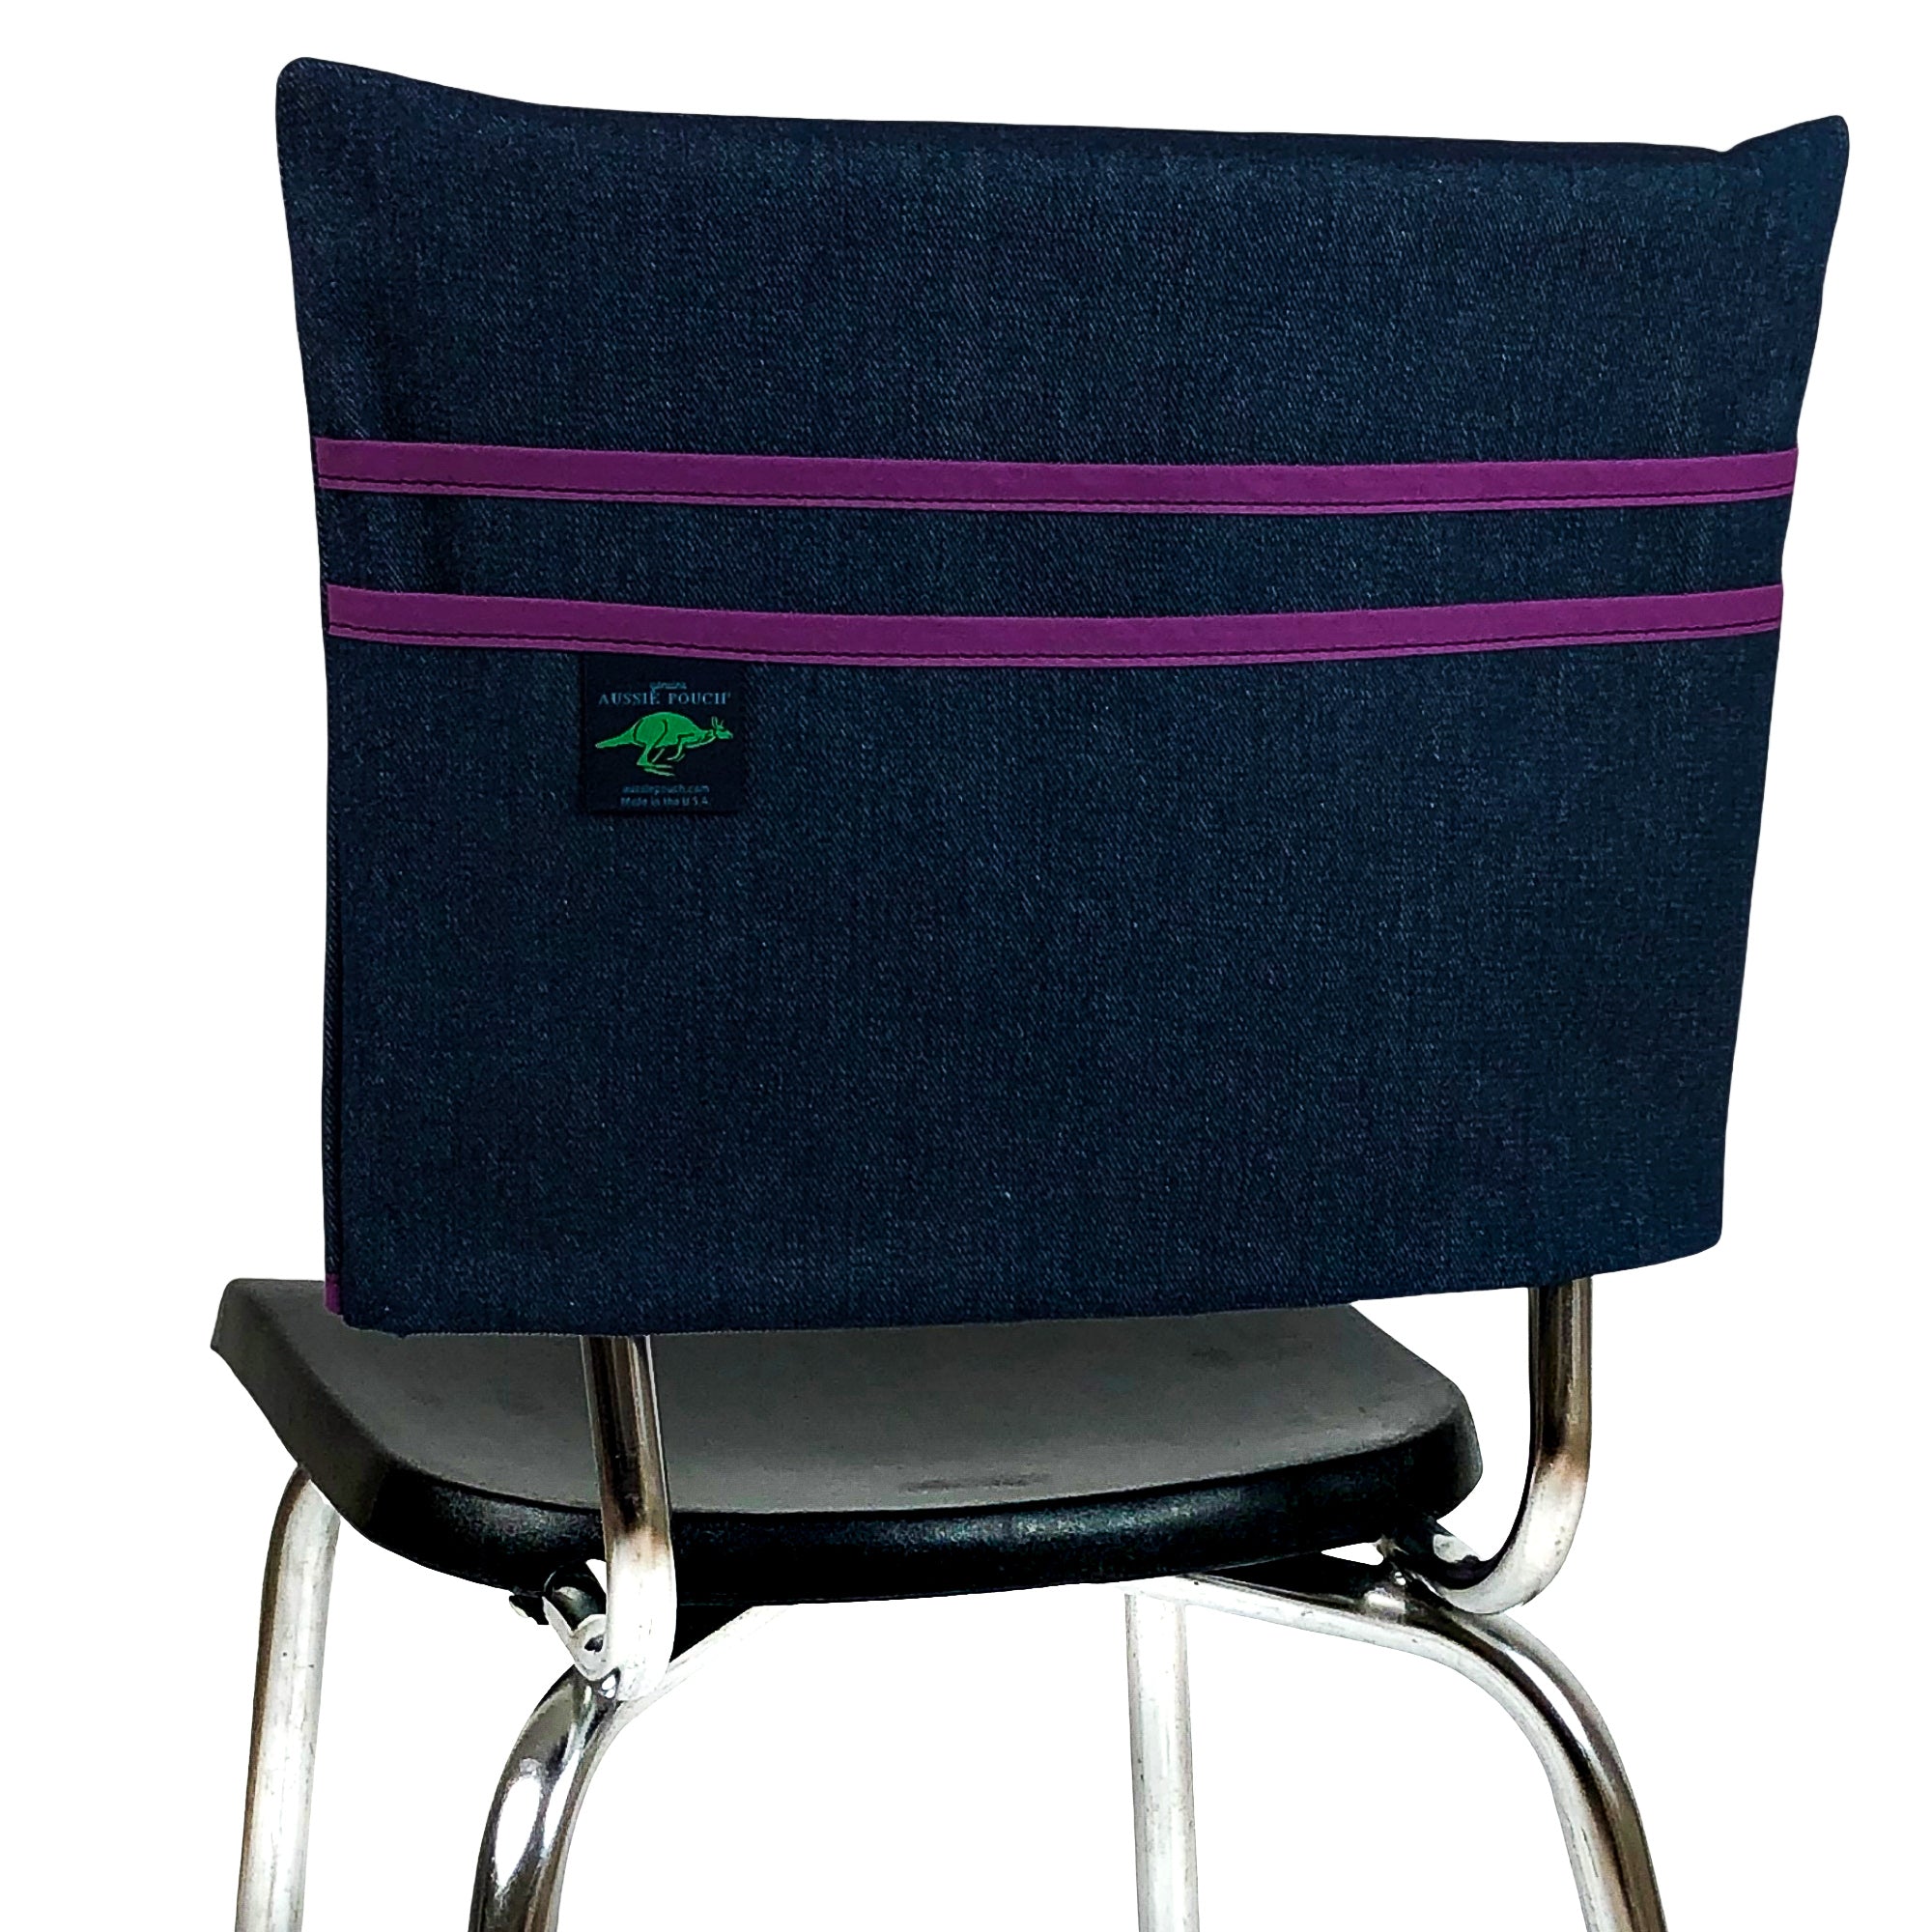 Aussie Pouch Classic Chair Pocket Purple Trim